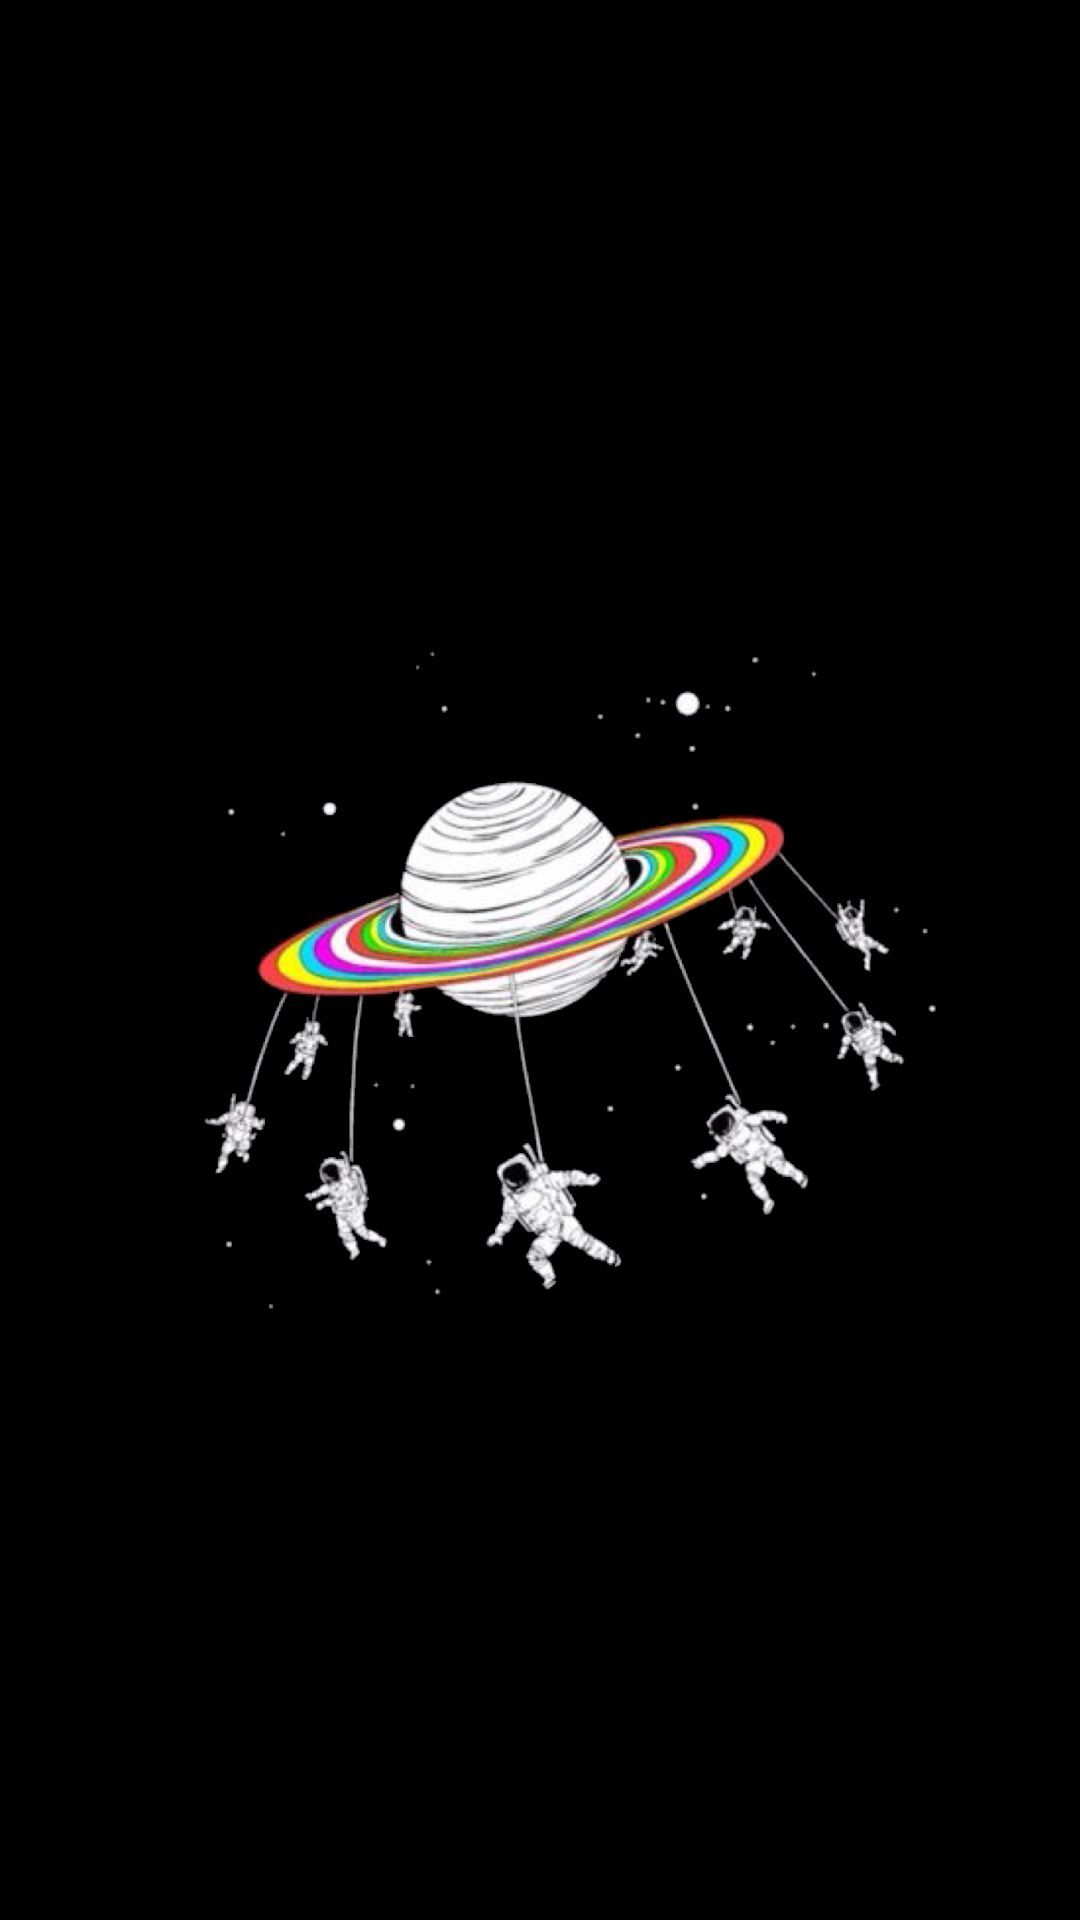 black #white #astronaut #saturn #planets #edgy #trippy #art #love